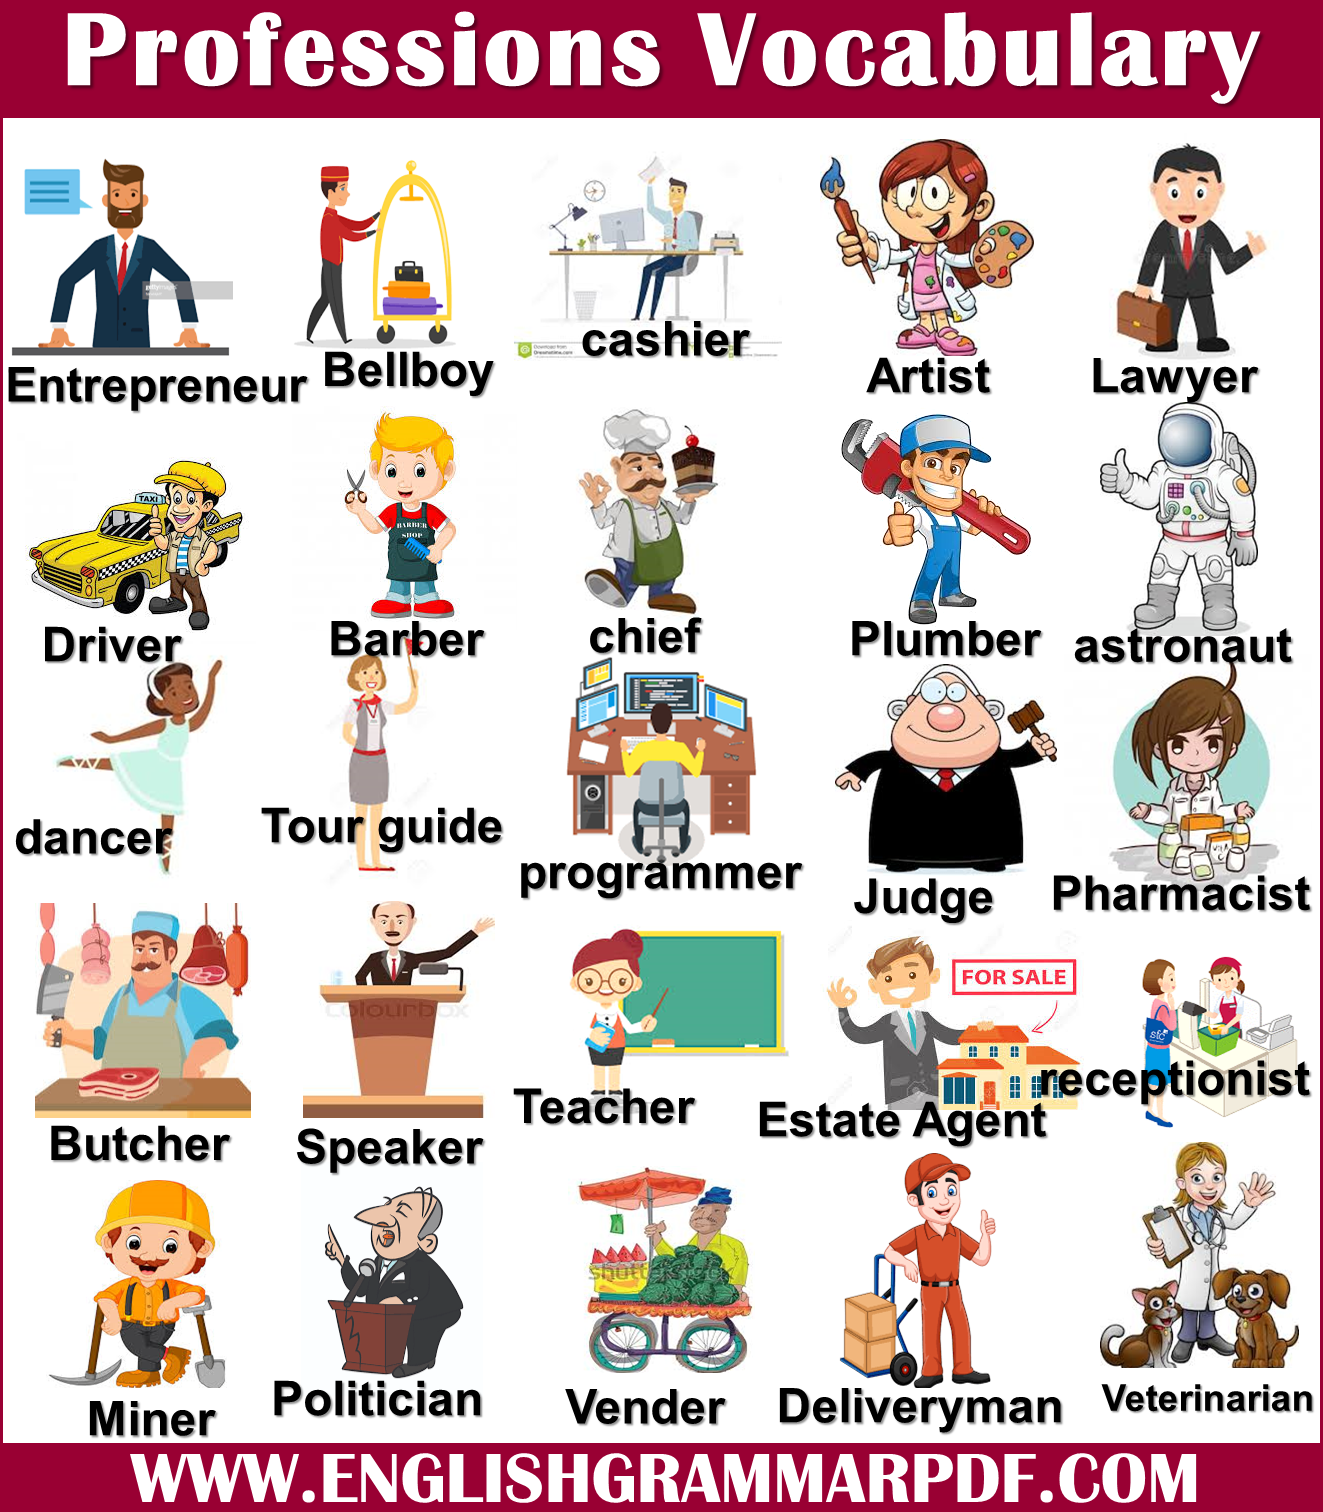 Professions topics. Professions Vocabulary. List of Professions. Профессии на английском. Professions список.